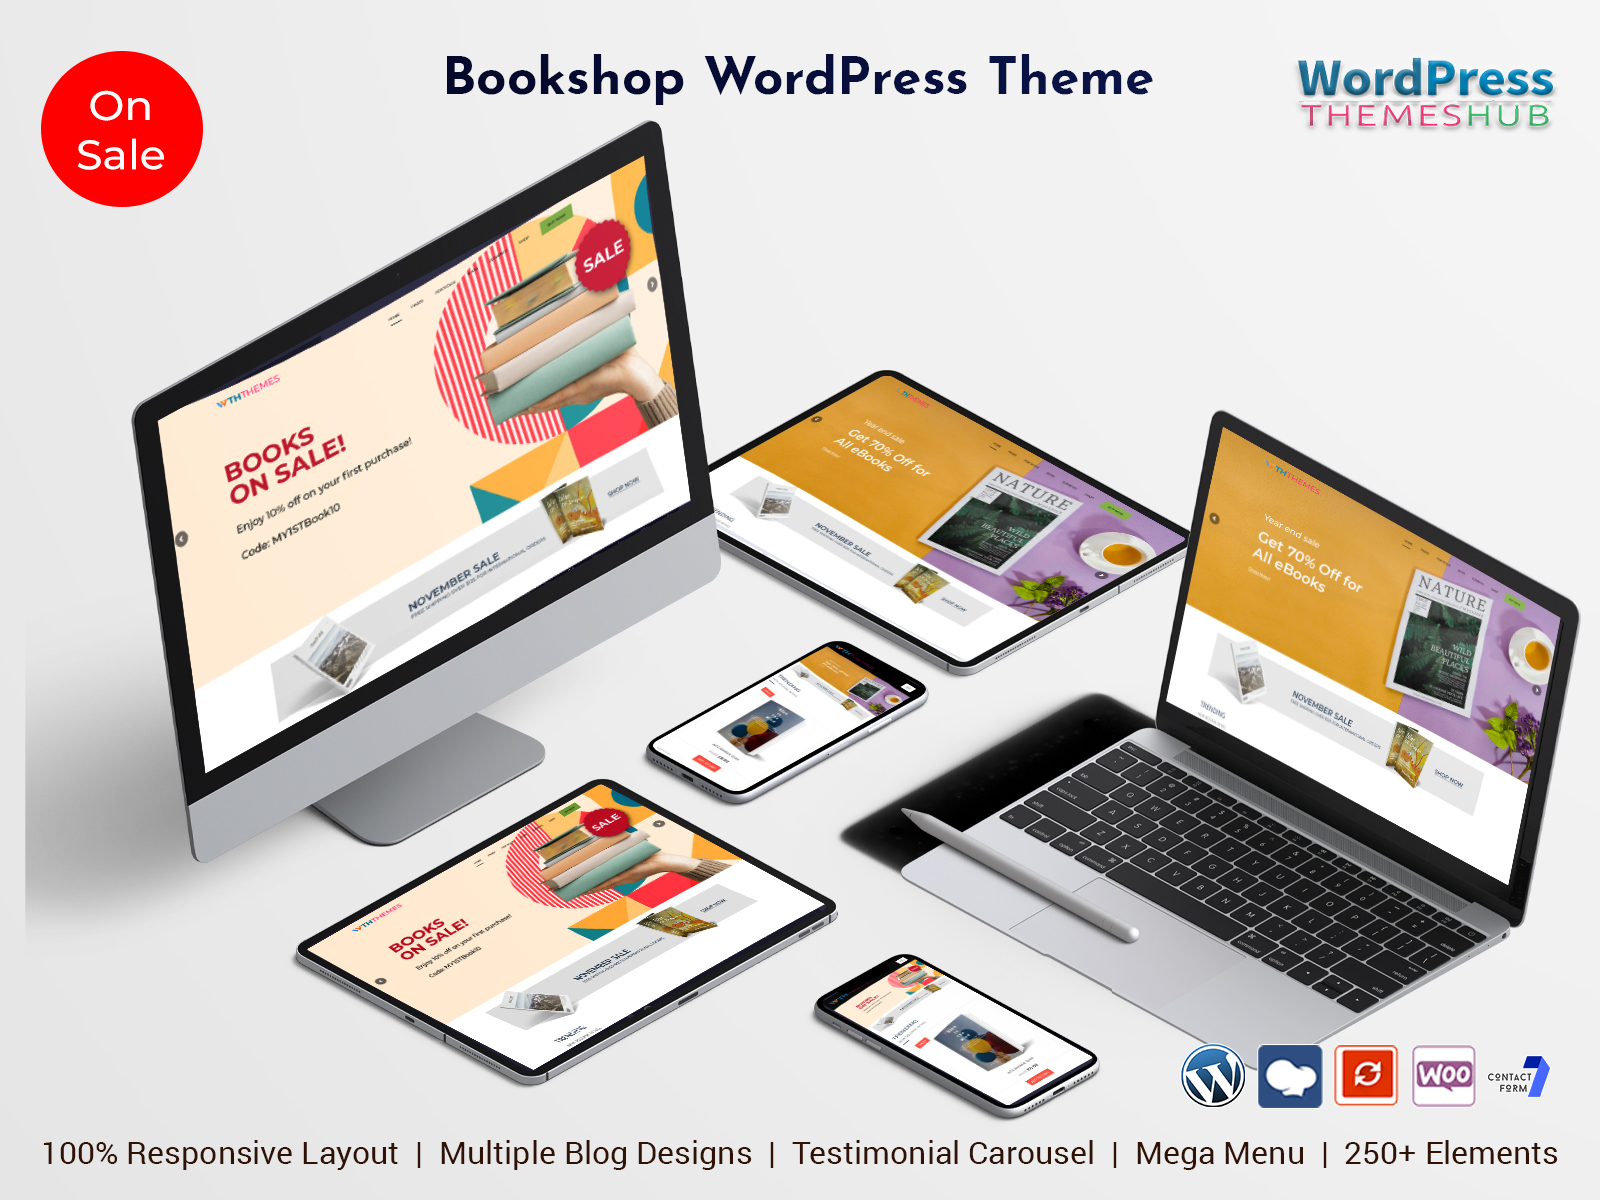 Bookshop WordPress Theme To Make Bookstore Websites